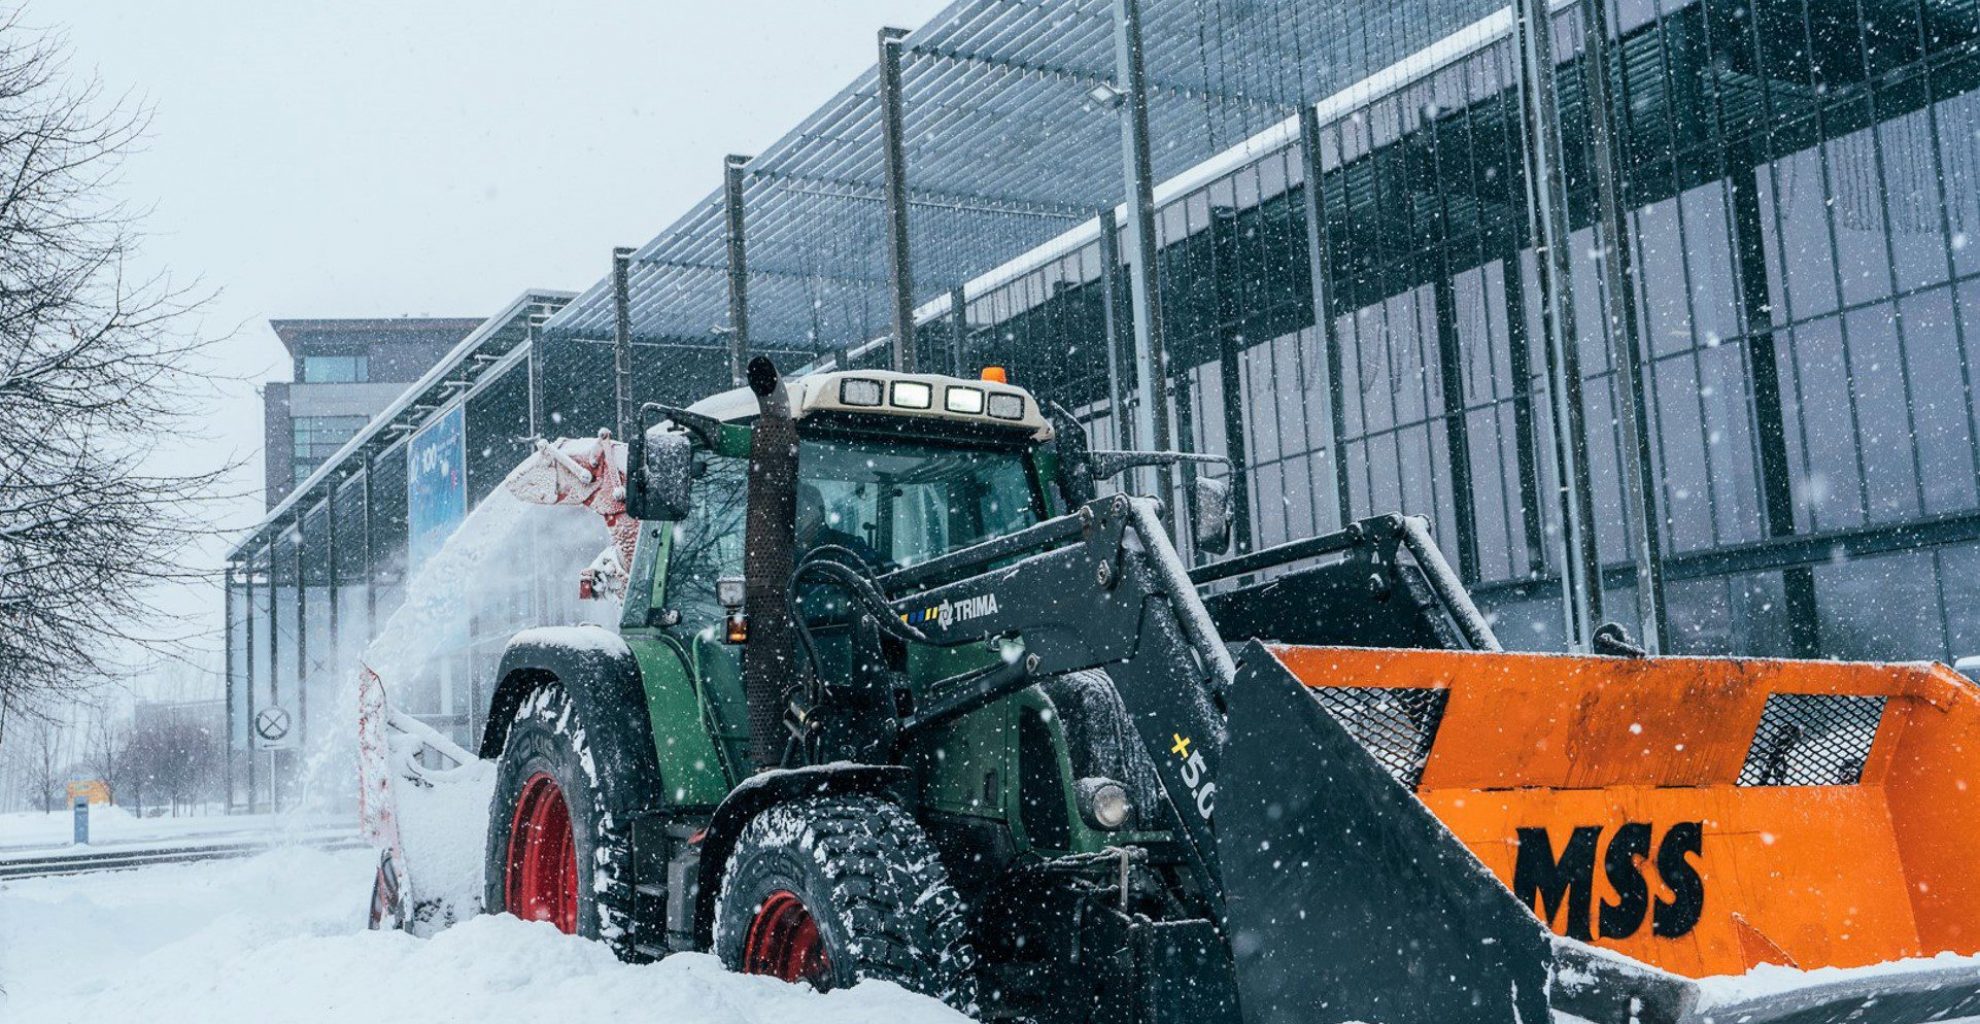 Bilde viser traktor med skuffe som måker snø